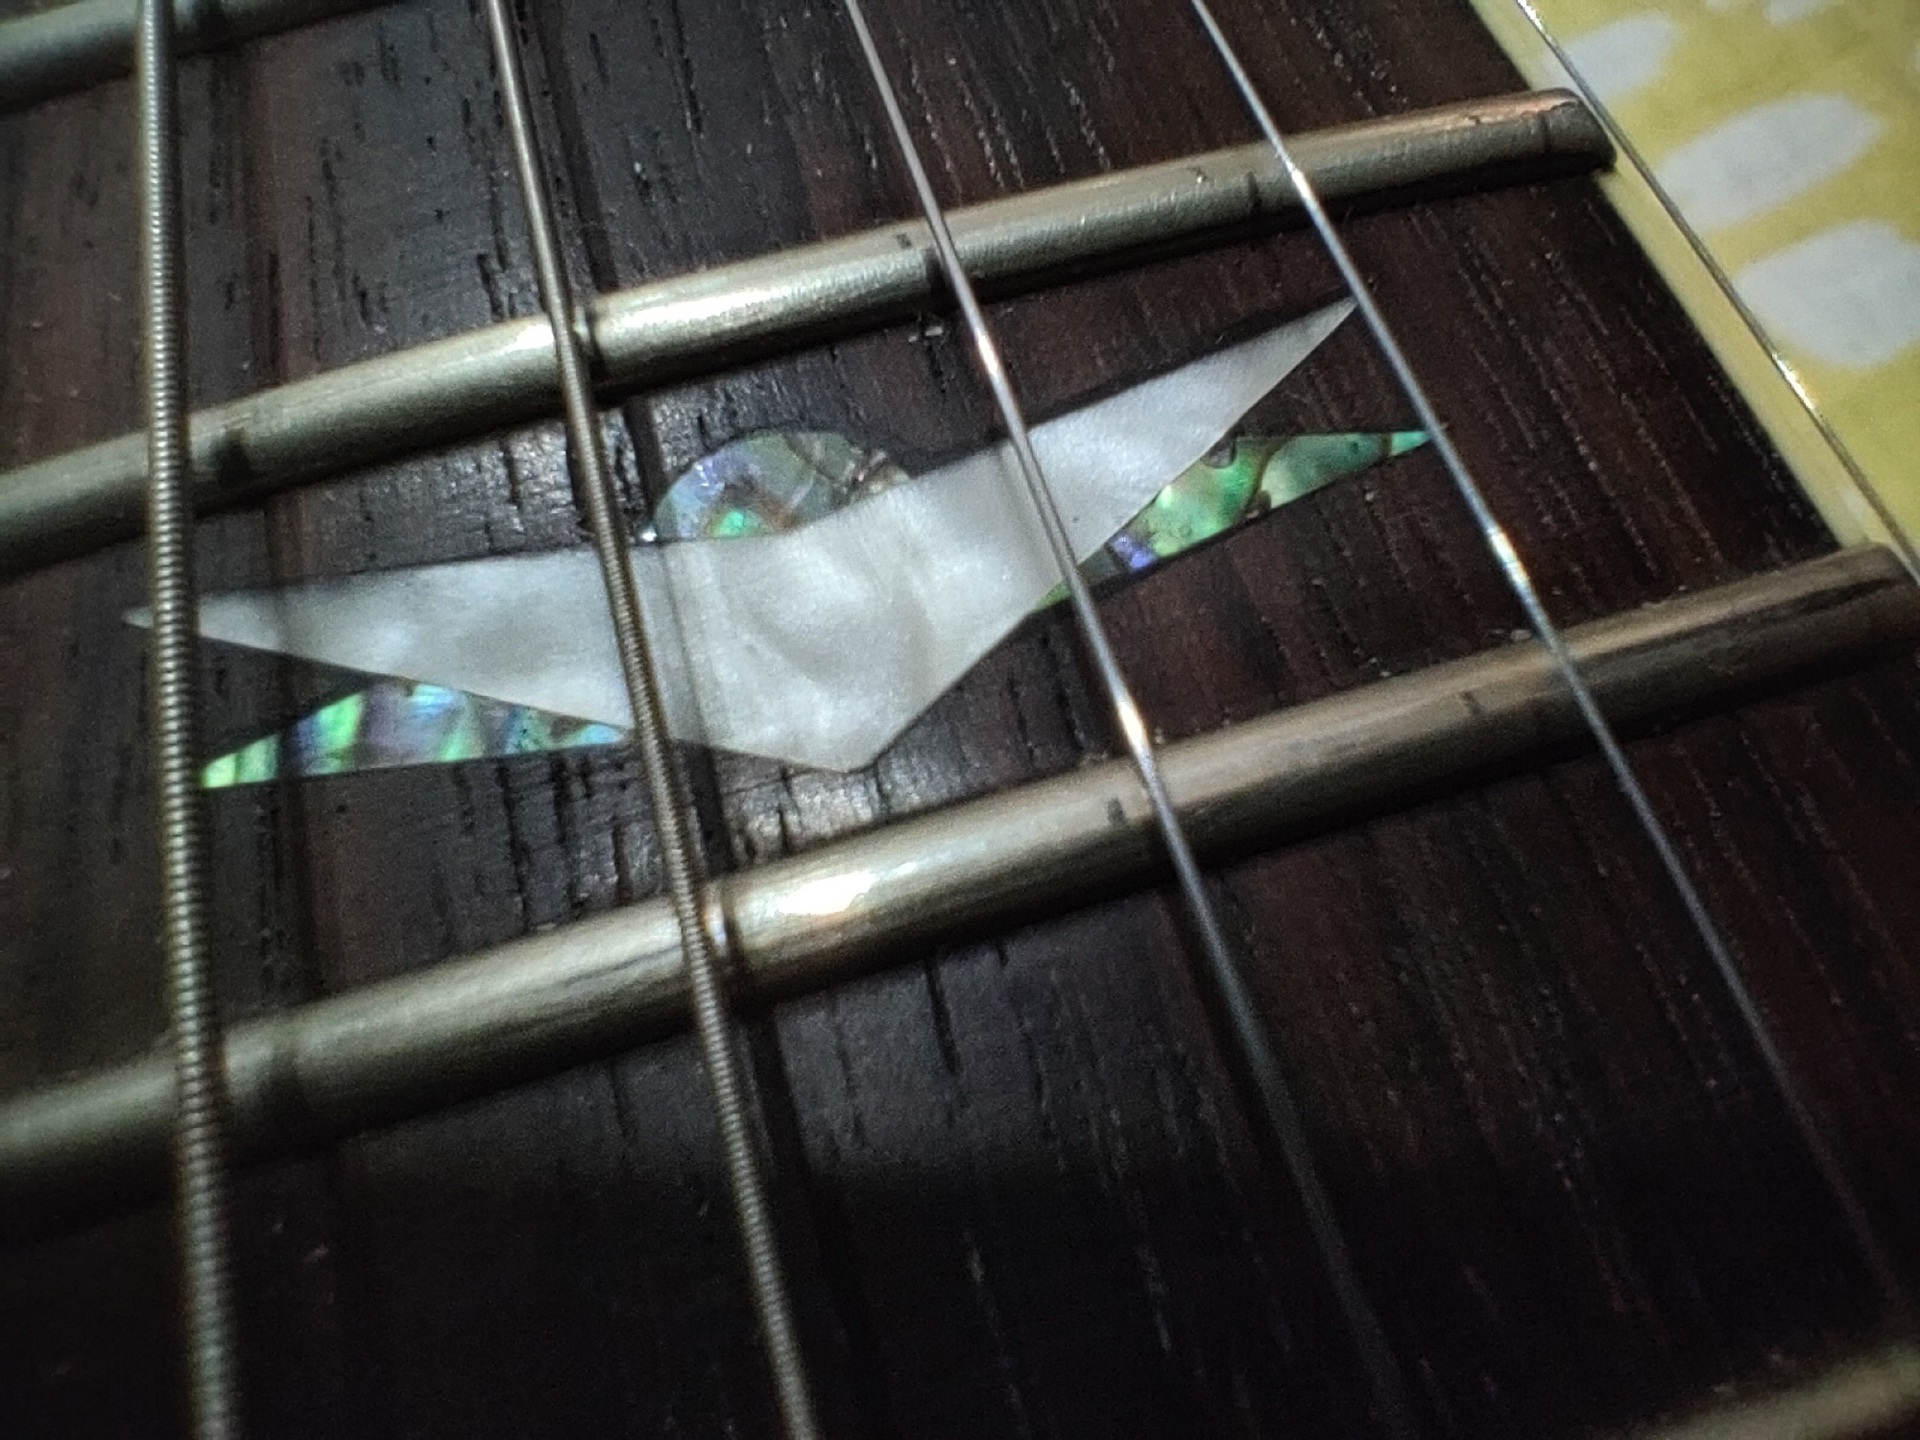 OnePlus 9RT macro camera sample of guitar strings and fretboard